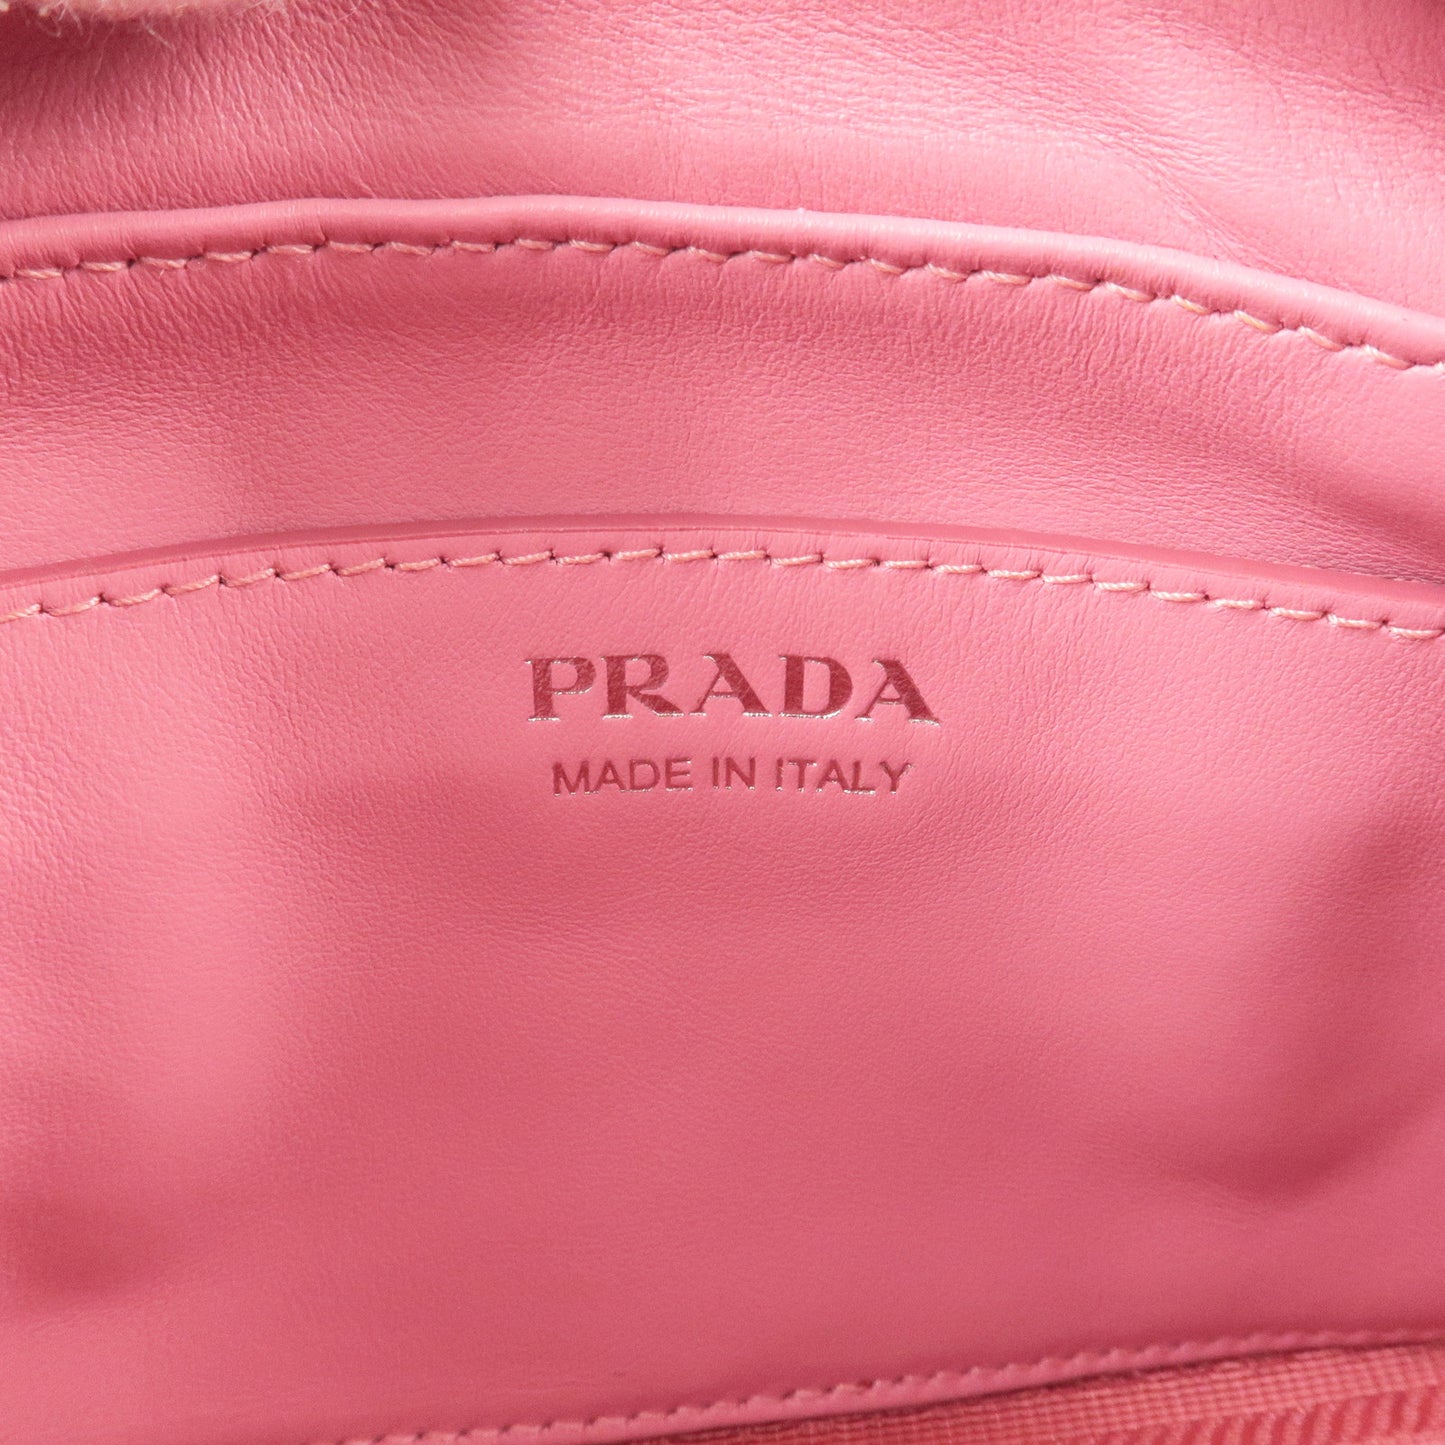 PRADA Logo Diagram Leather Chain Shoulder Bag Pink 1BH083